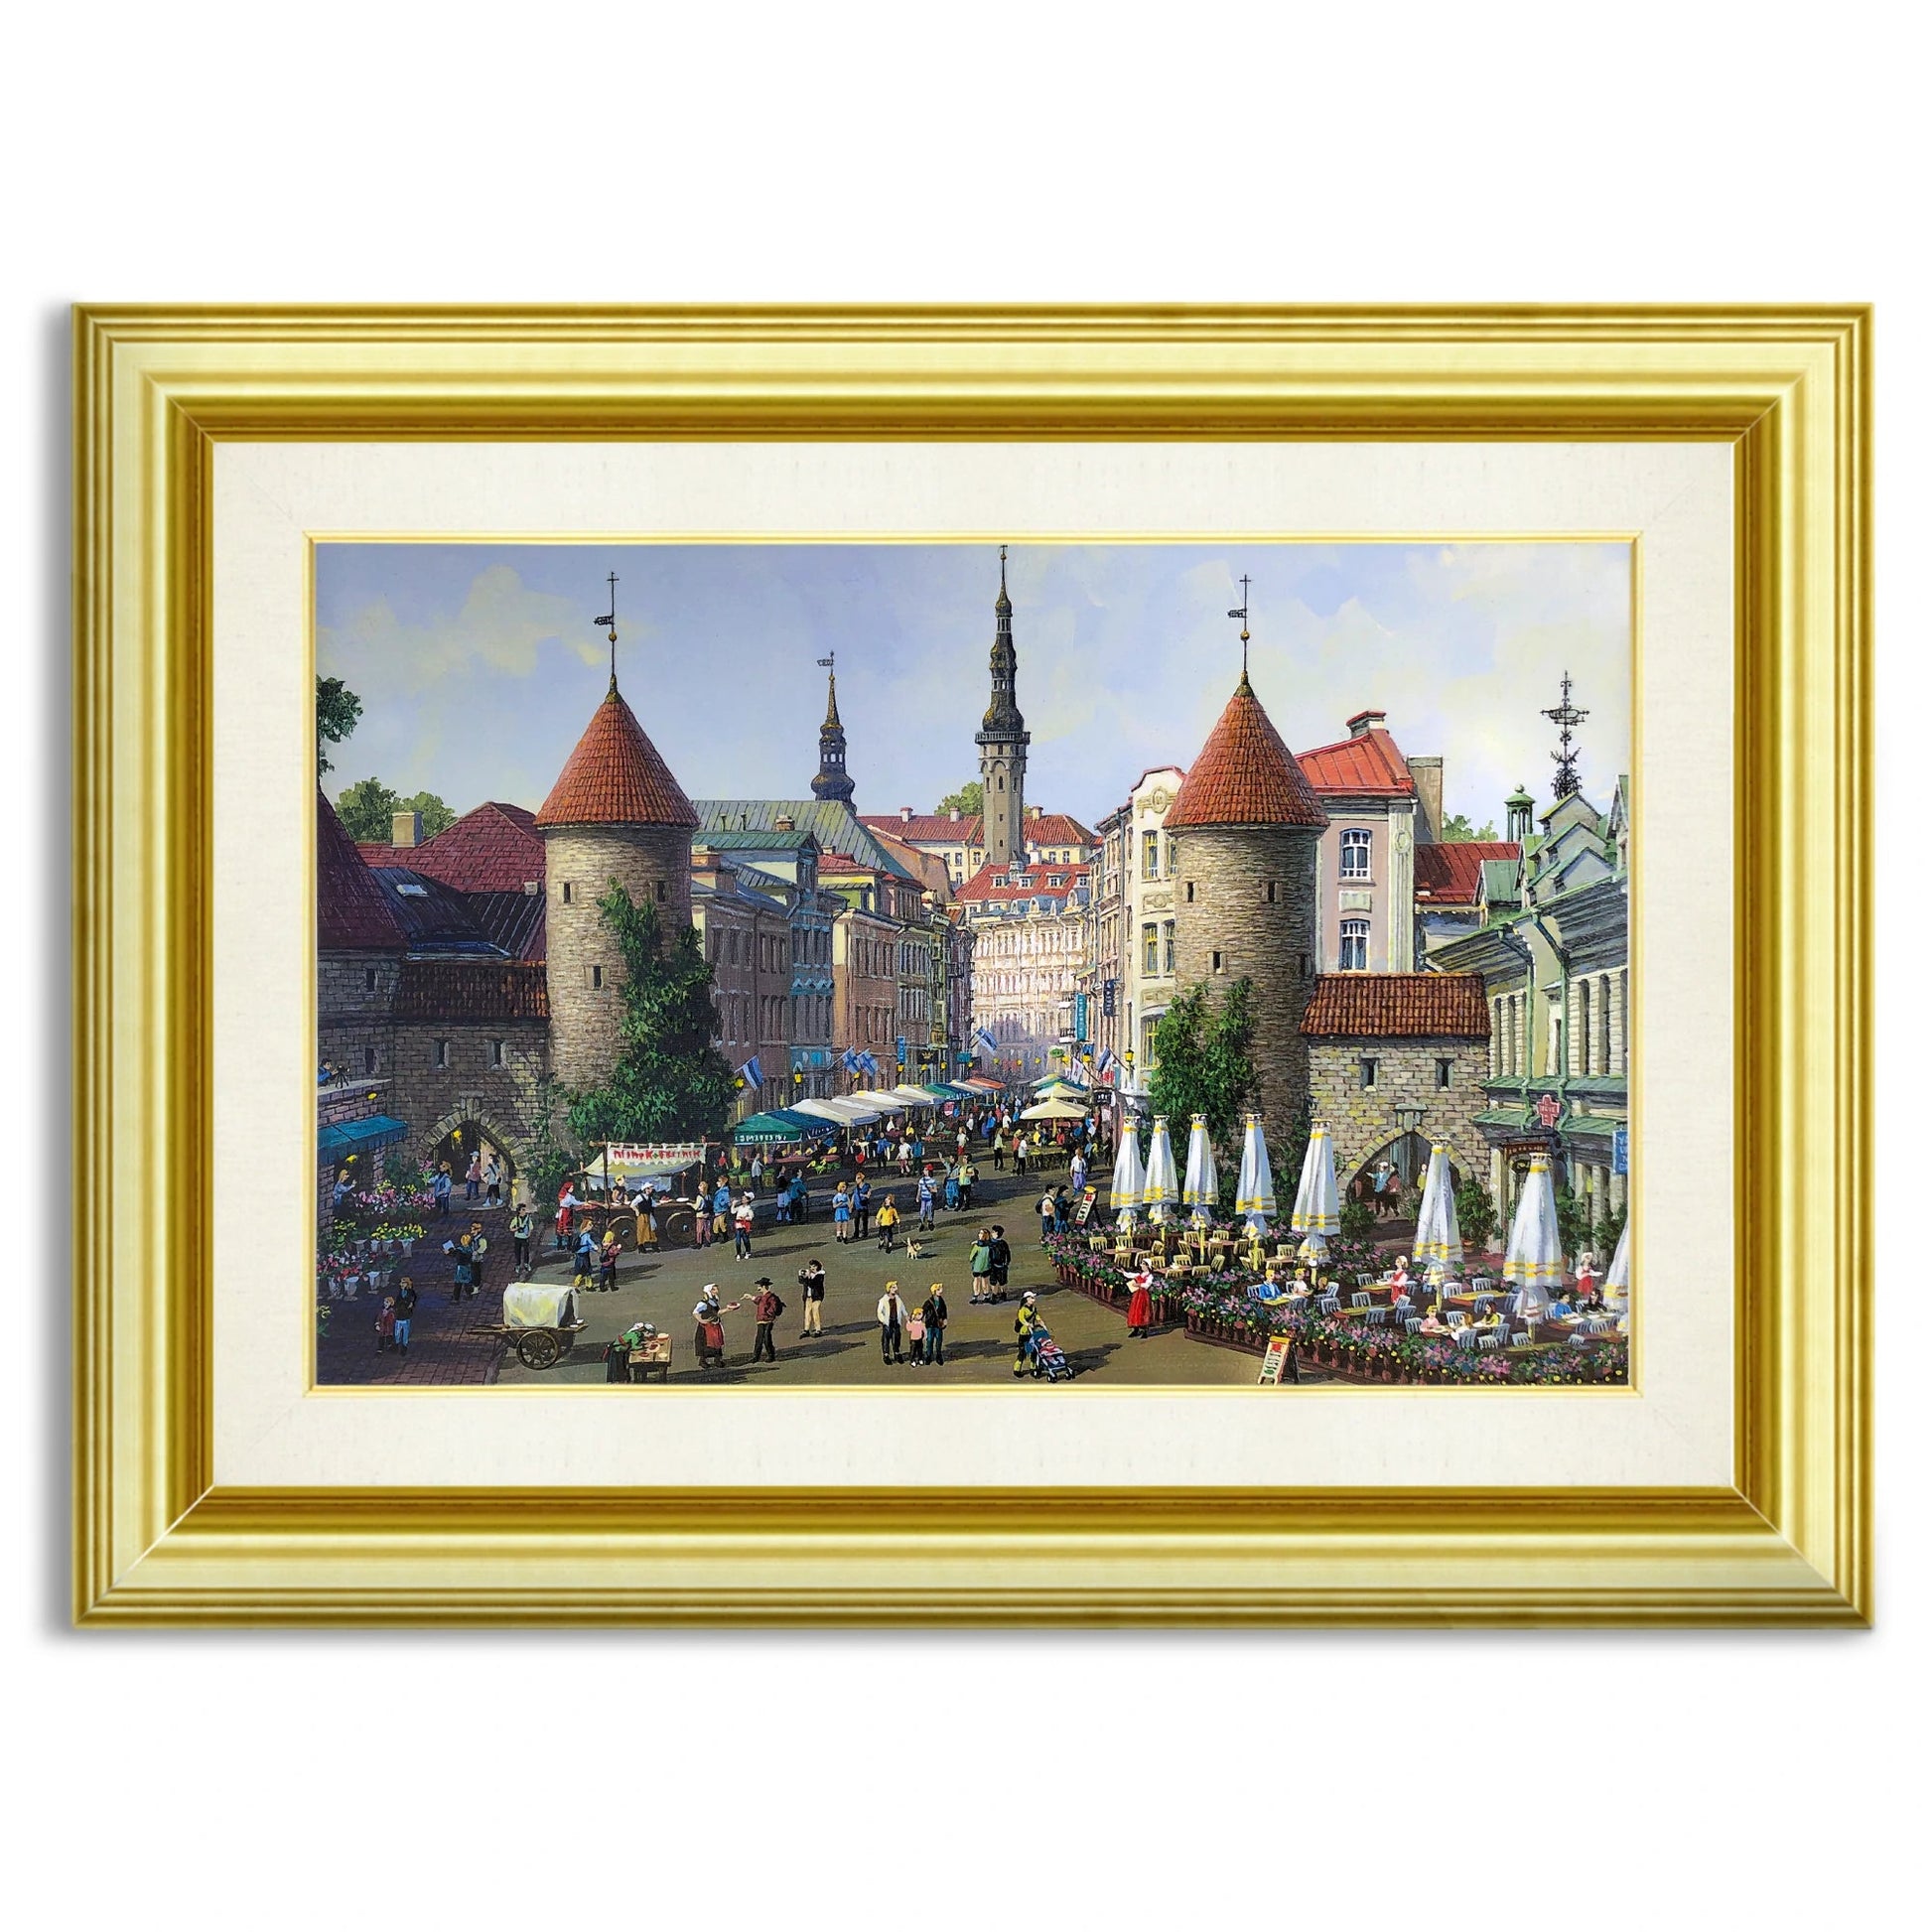 Alexander Chen - Tallinn Viru Gate (UNFRAMED) - 16" x 24" - Giclee on Canvas - Hand Embellished